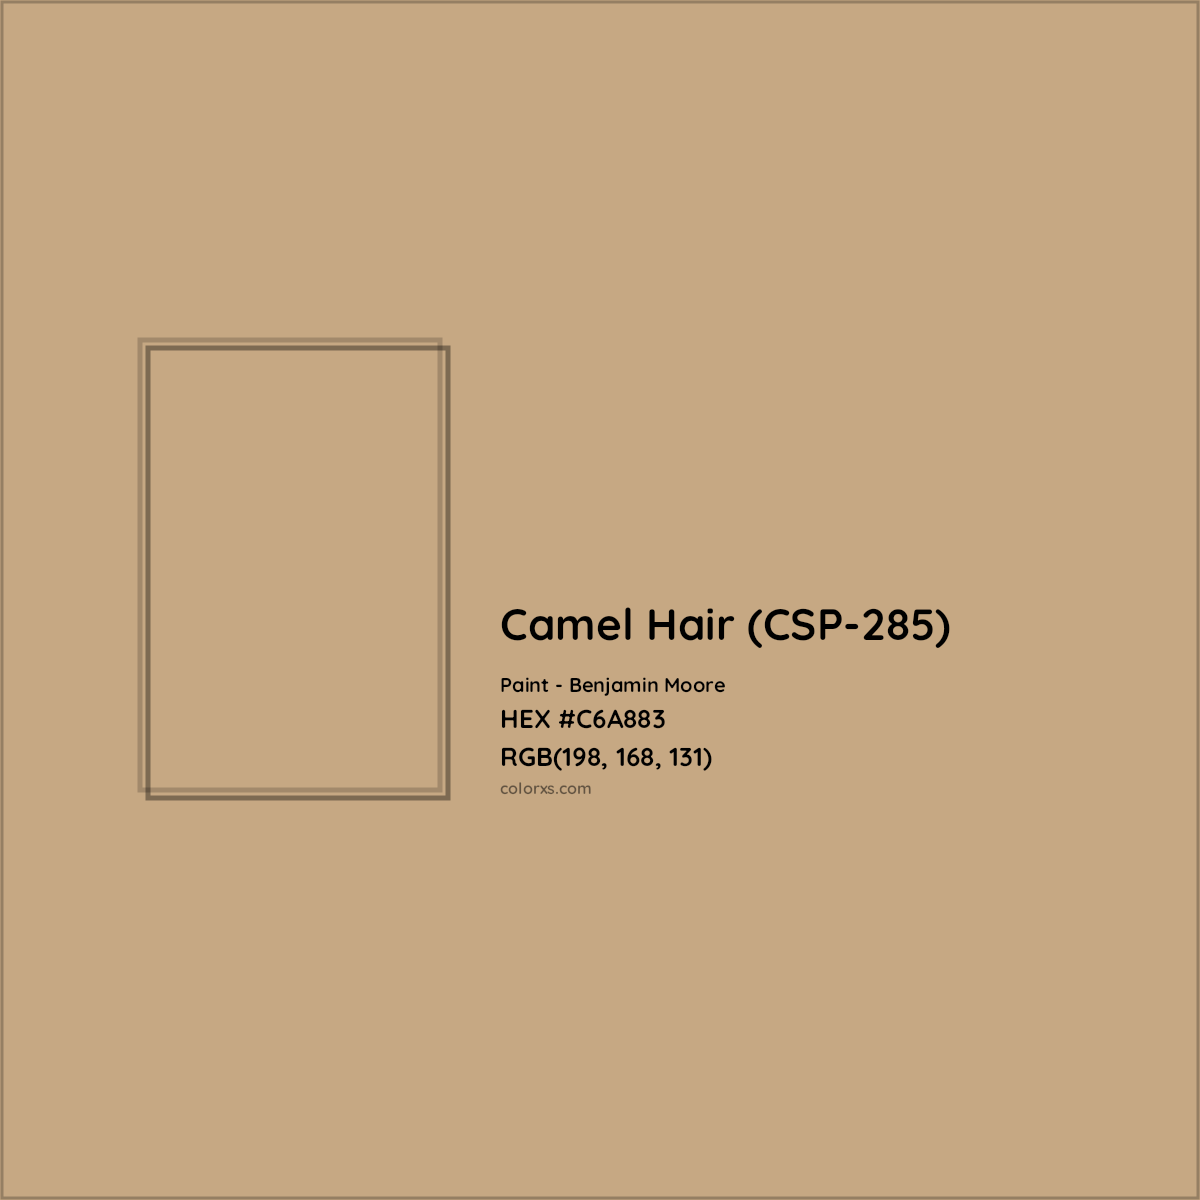 HEX #C6A883 Camel Hair (CSP-285) Paint Benjamin Moore - Color Code